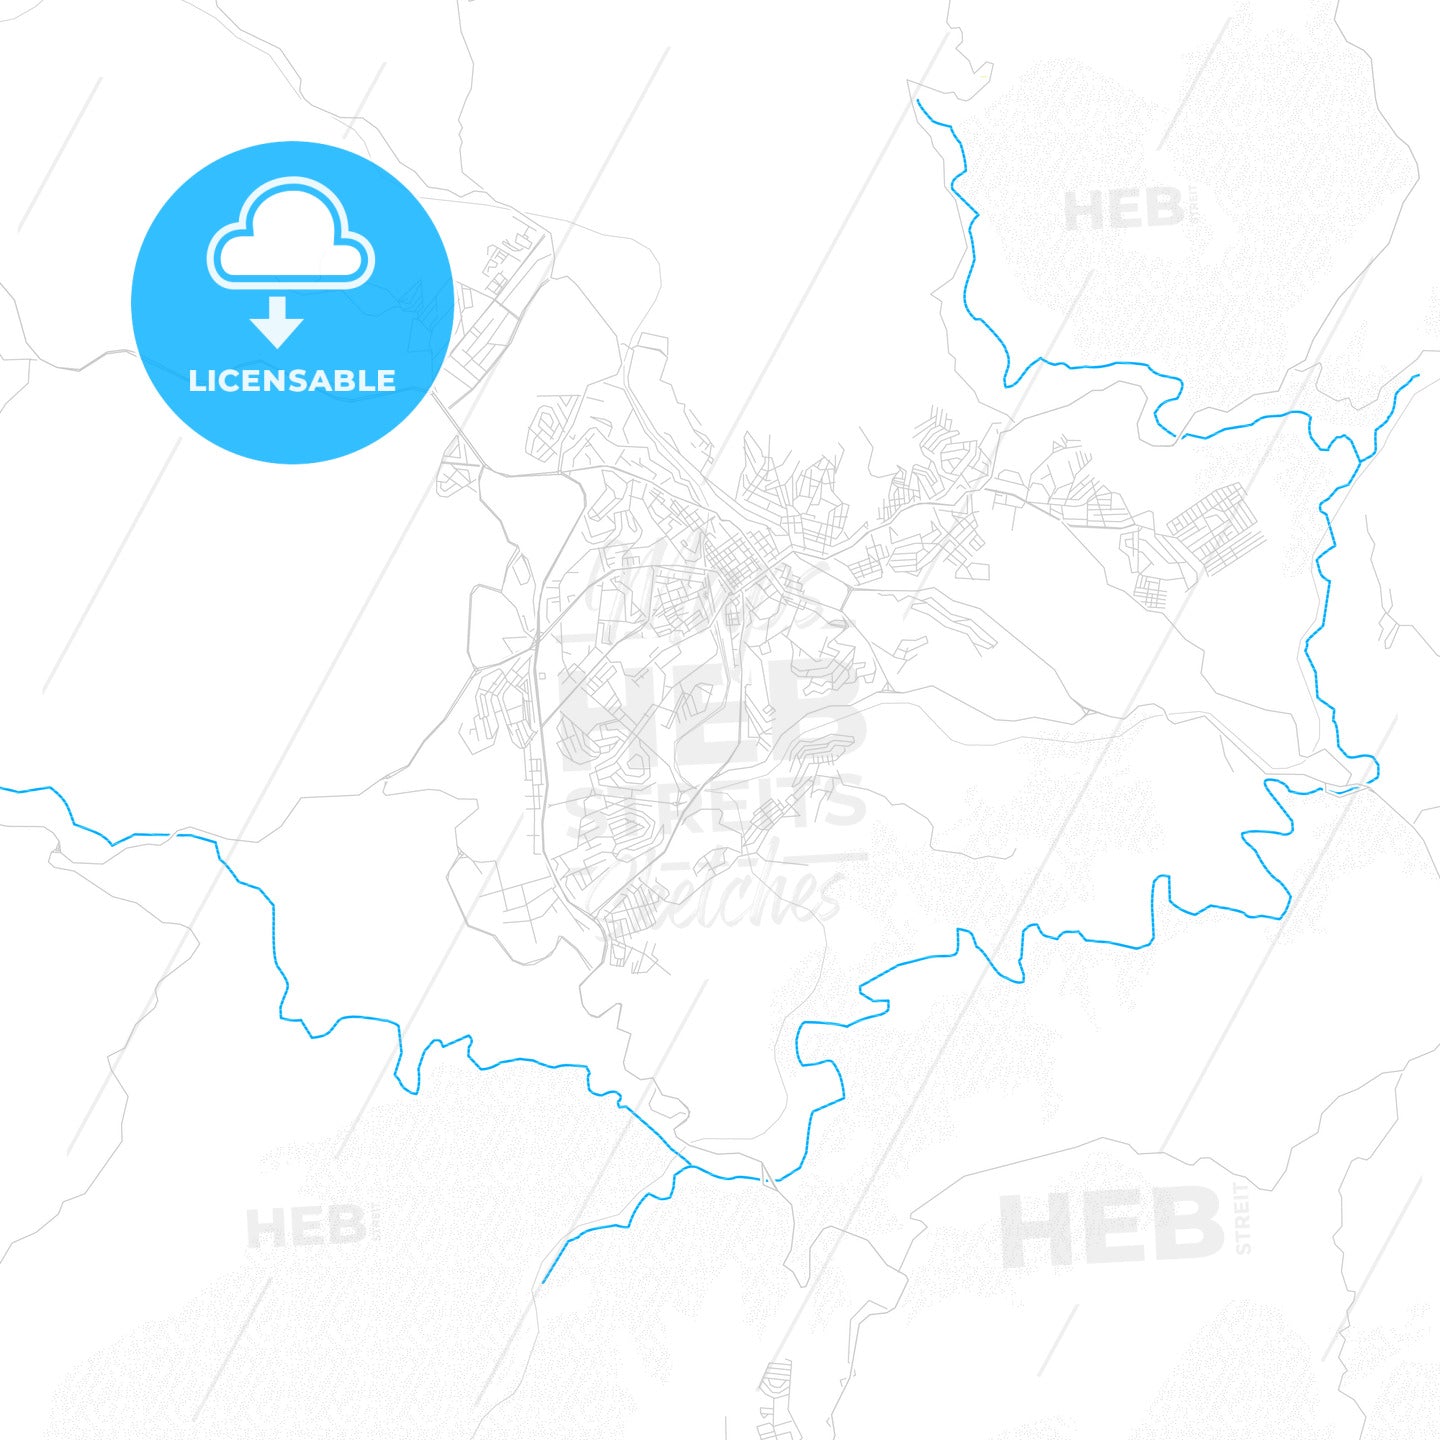 Souk Ahras, Algeria PDF vector map with water in focus